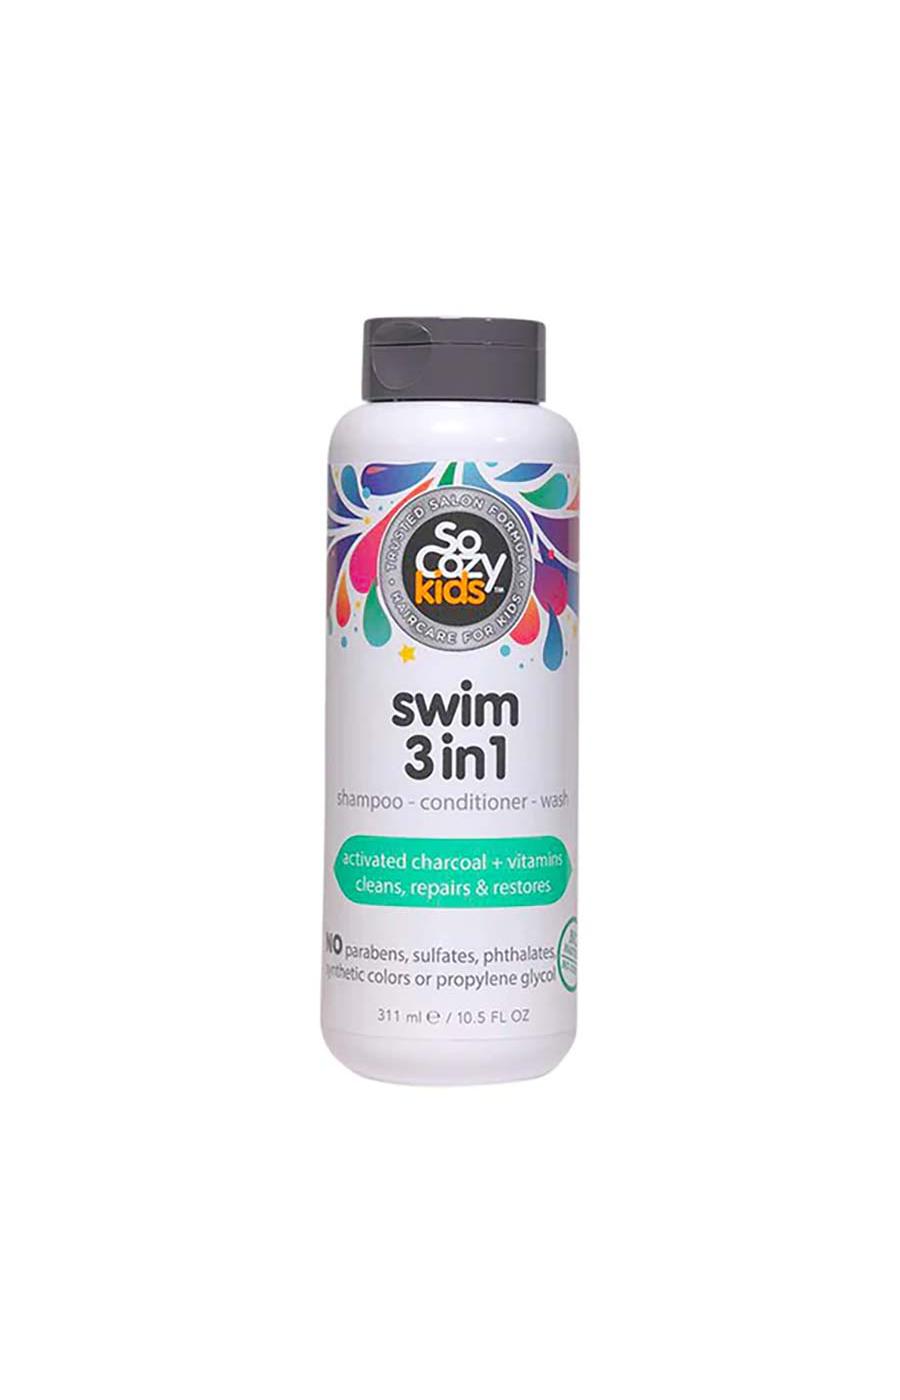 SoCozy Kids Swim 3-in-1 Shampoo - Conditioner - Wash; image 1 of 2